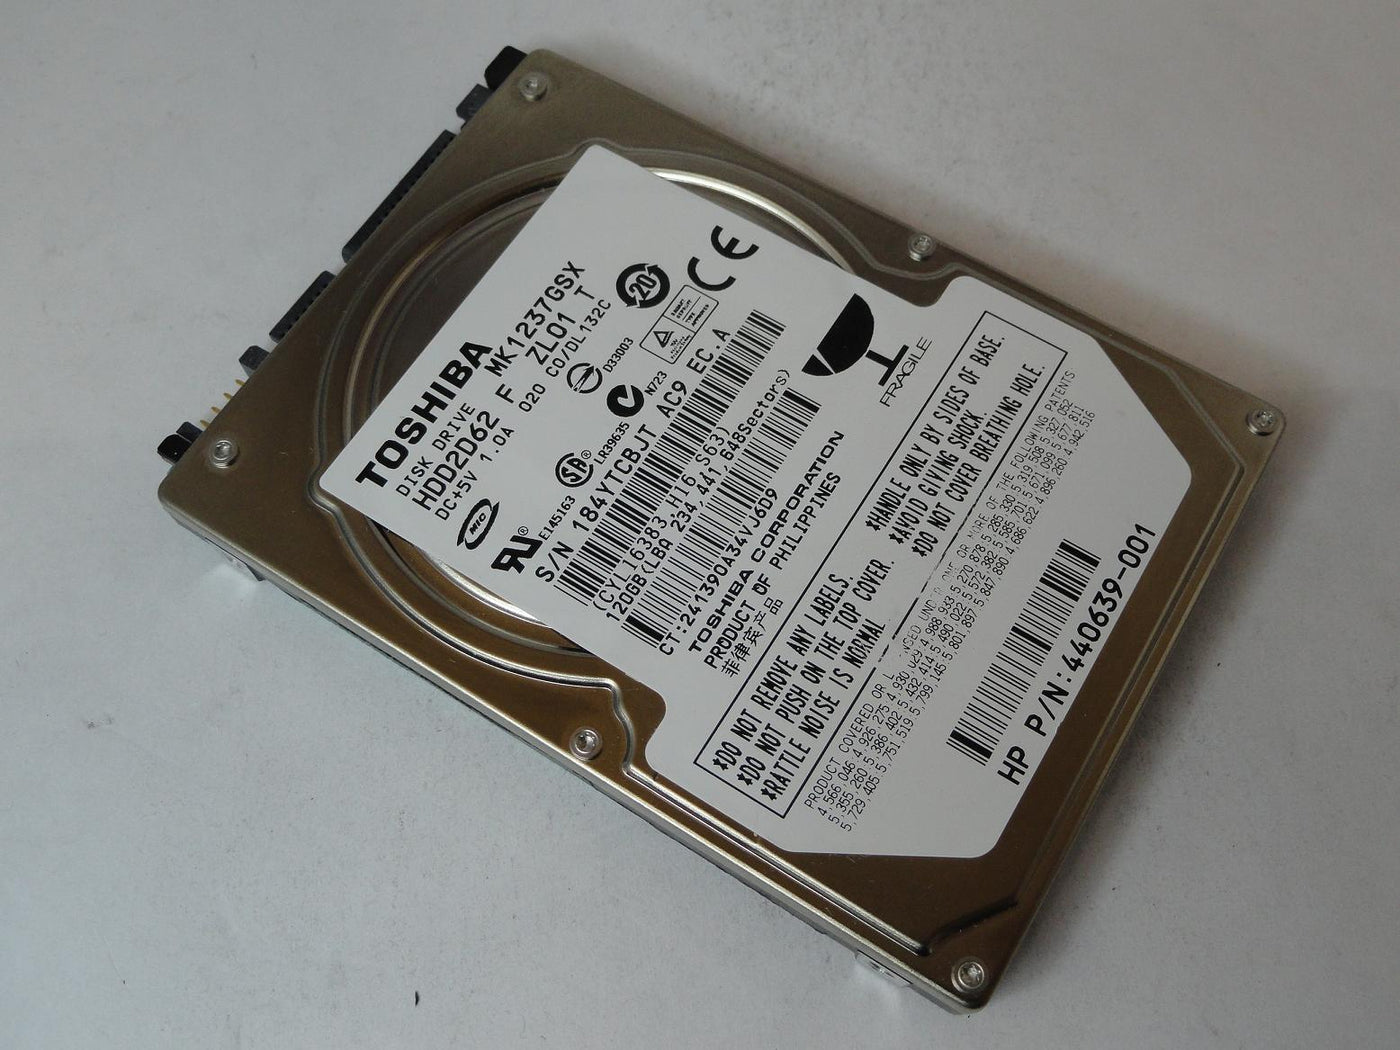 HDD2D62 - Toshiba 120GB SATA 5400rpm 2.5in HDD - Refurbished